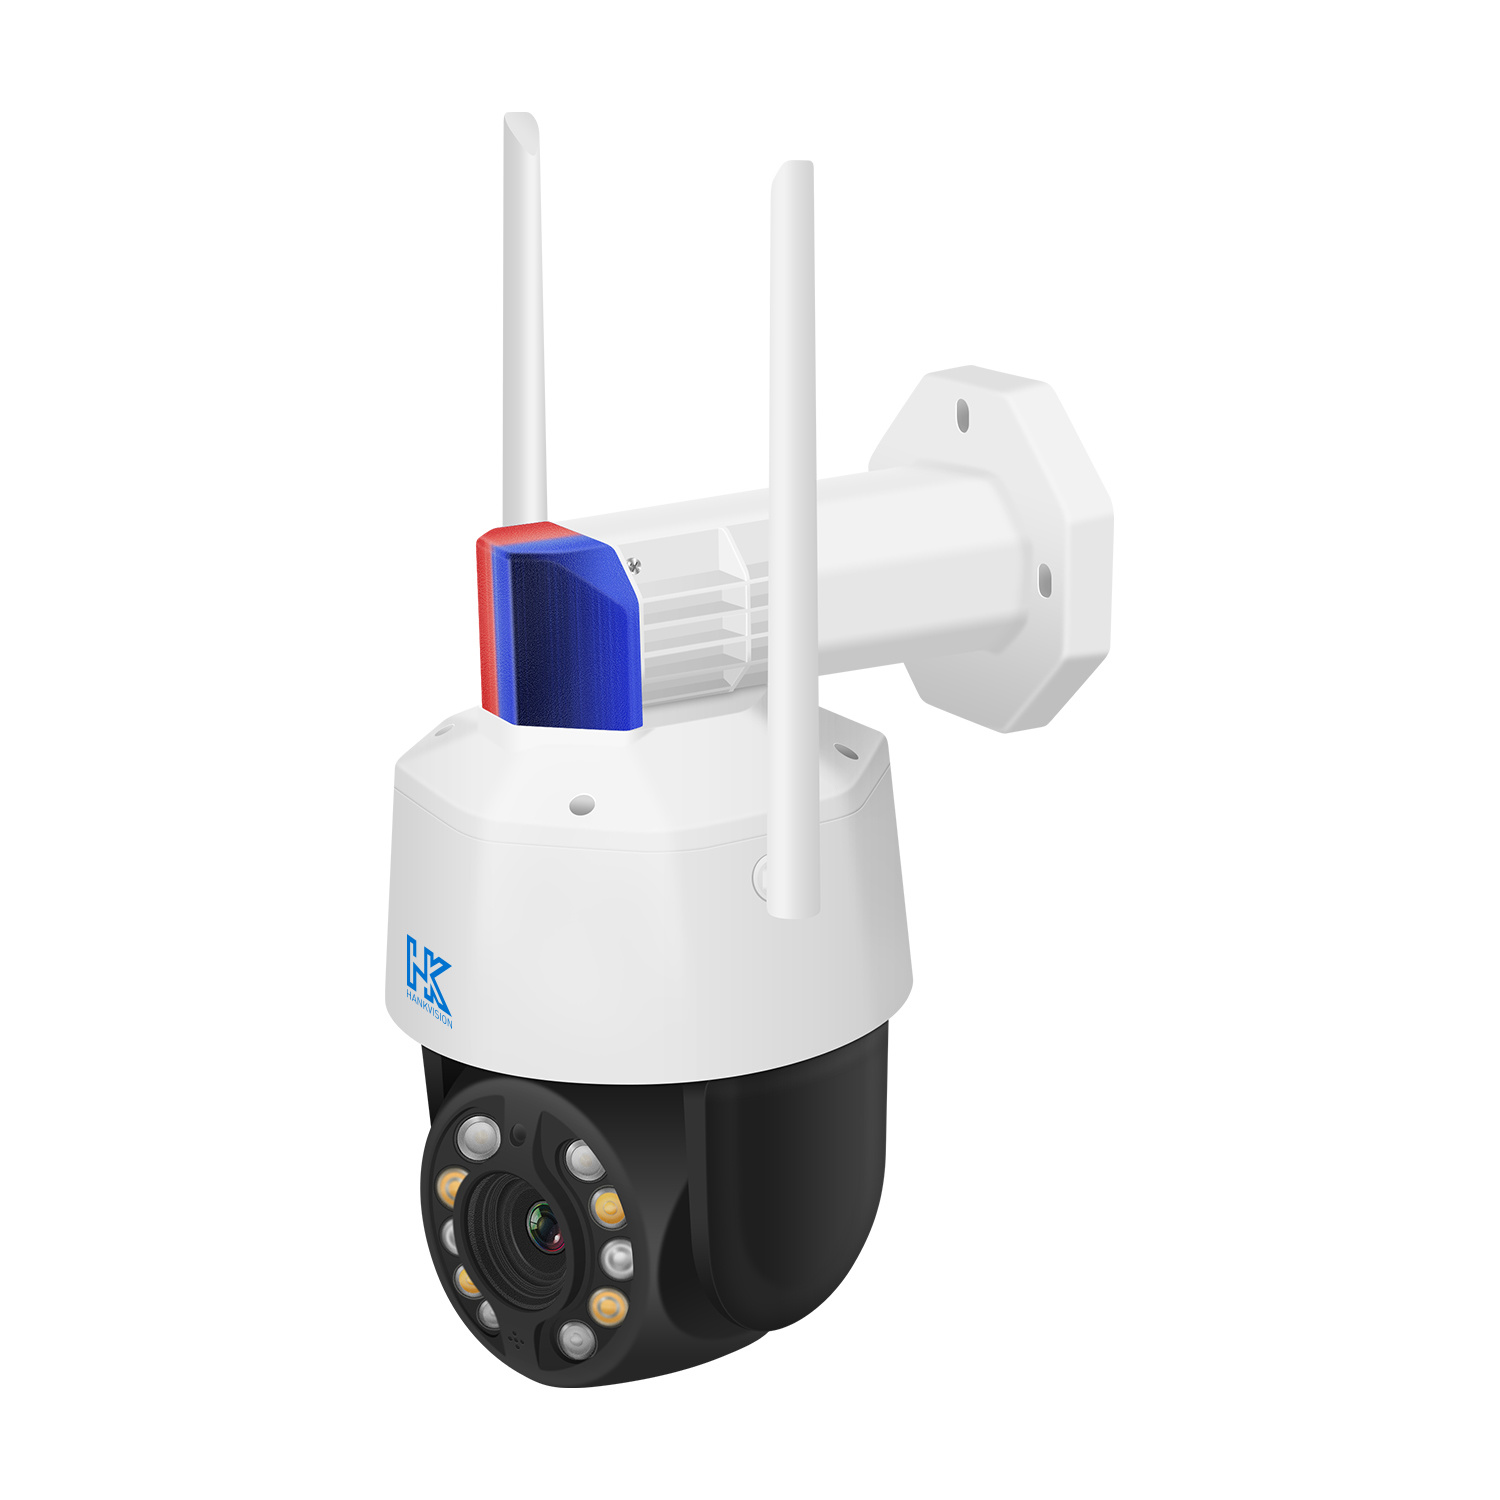 Hankvision IP Camera 3MP 20xzoom 4G IP Camera Poe 2-Way Audio Waterproof Hisee X CCTV with Alarm Lights